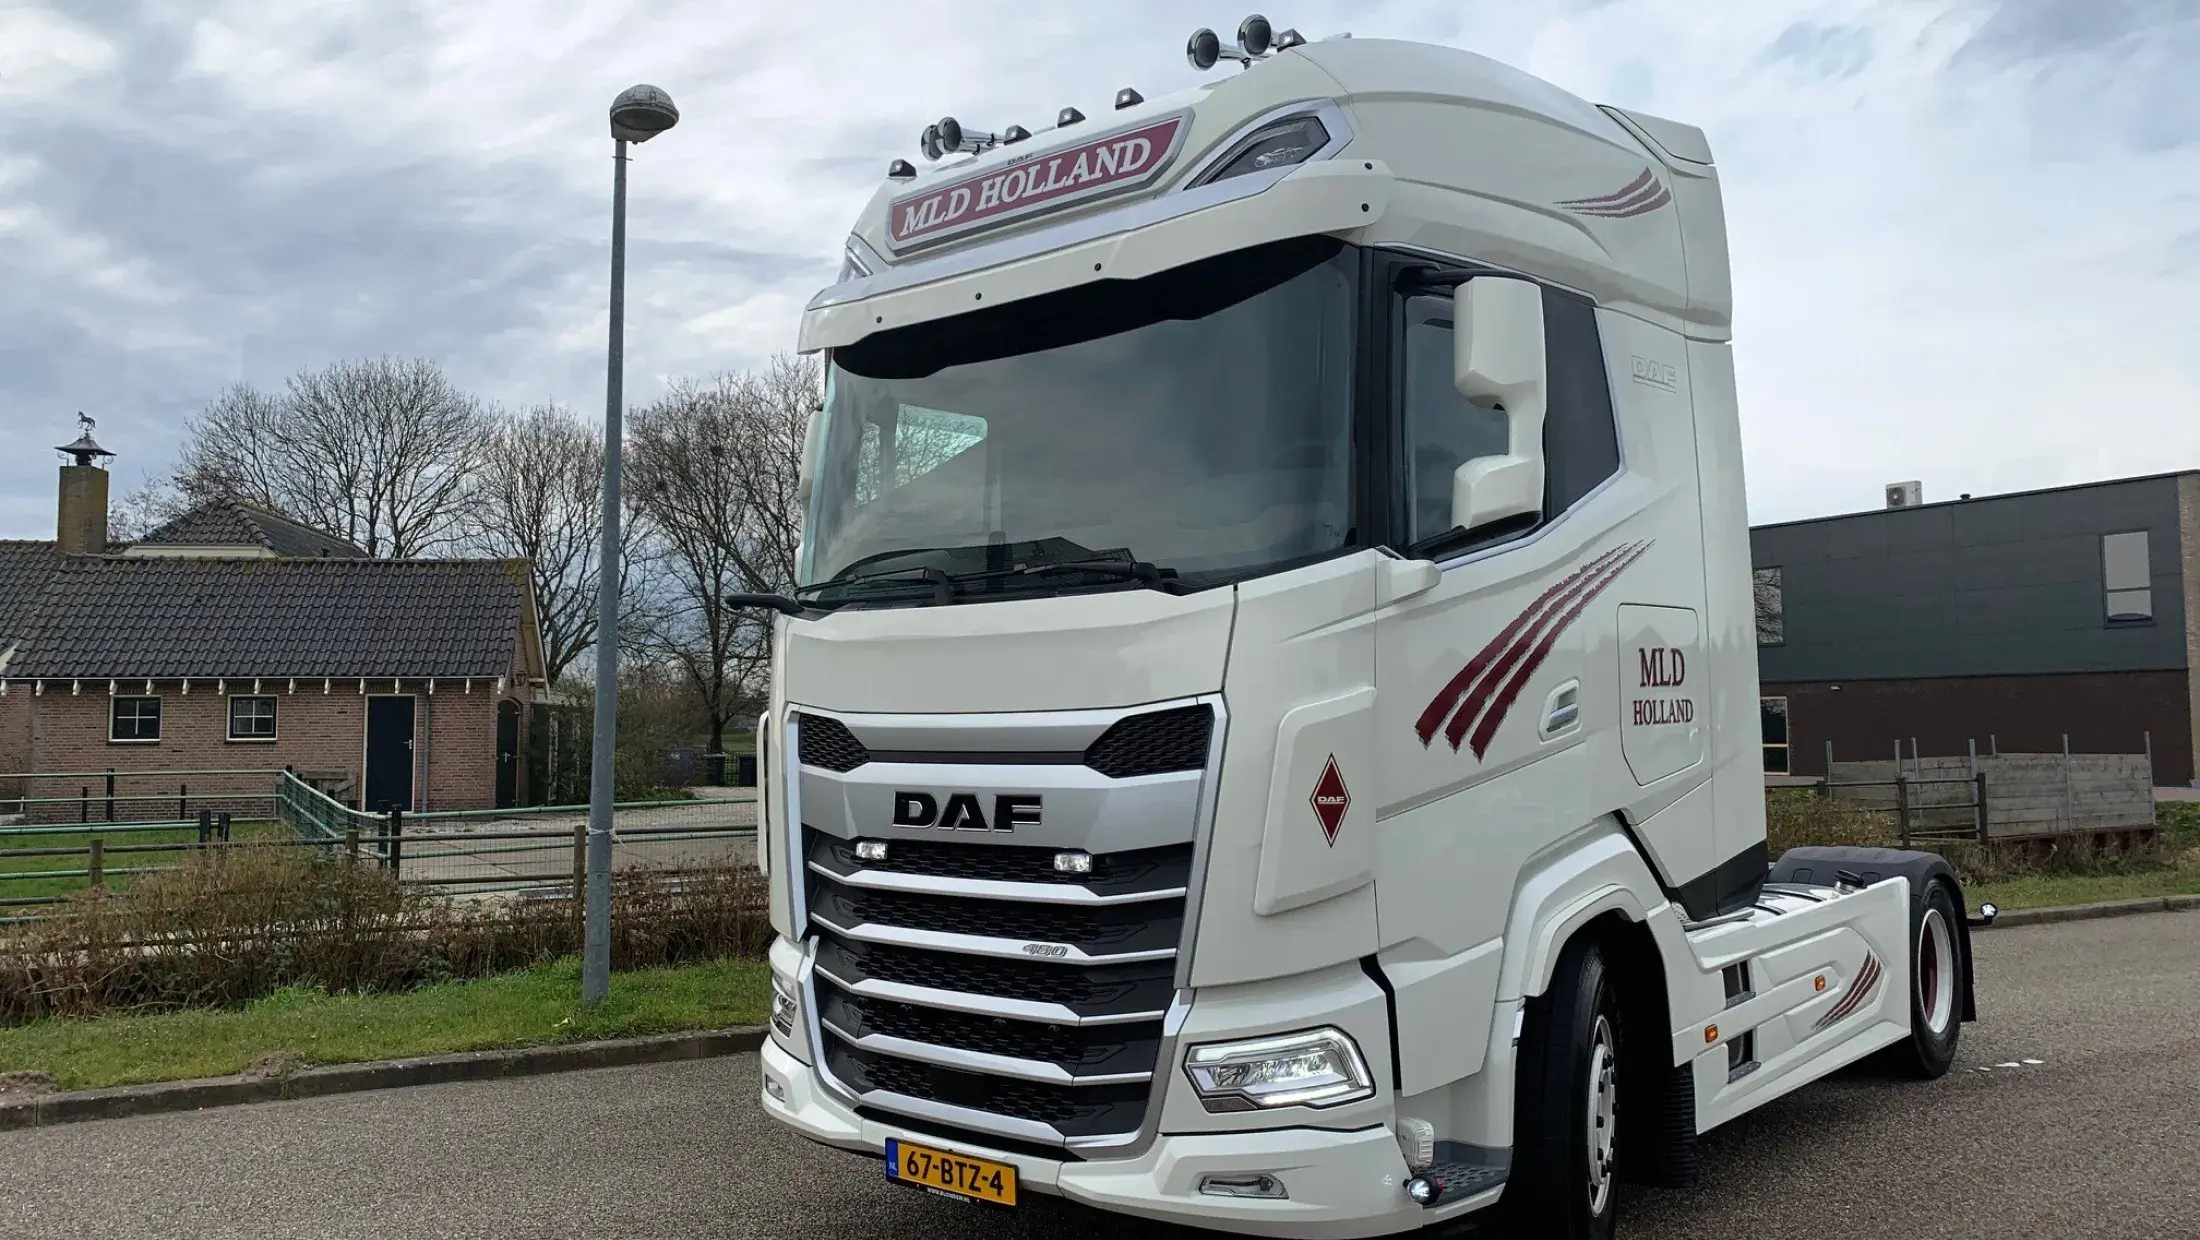 DAF XG + 480 FT NGD - MLD Holland